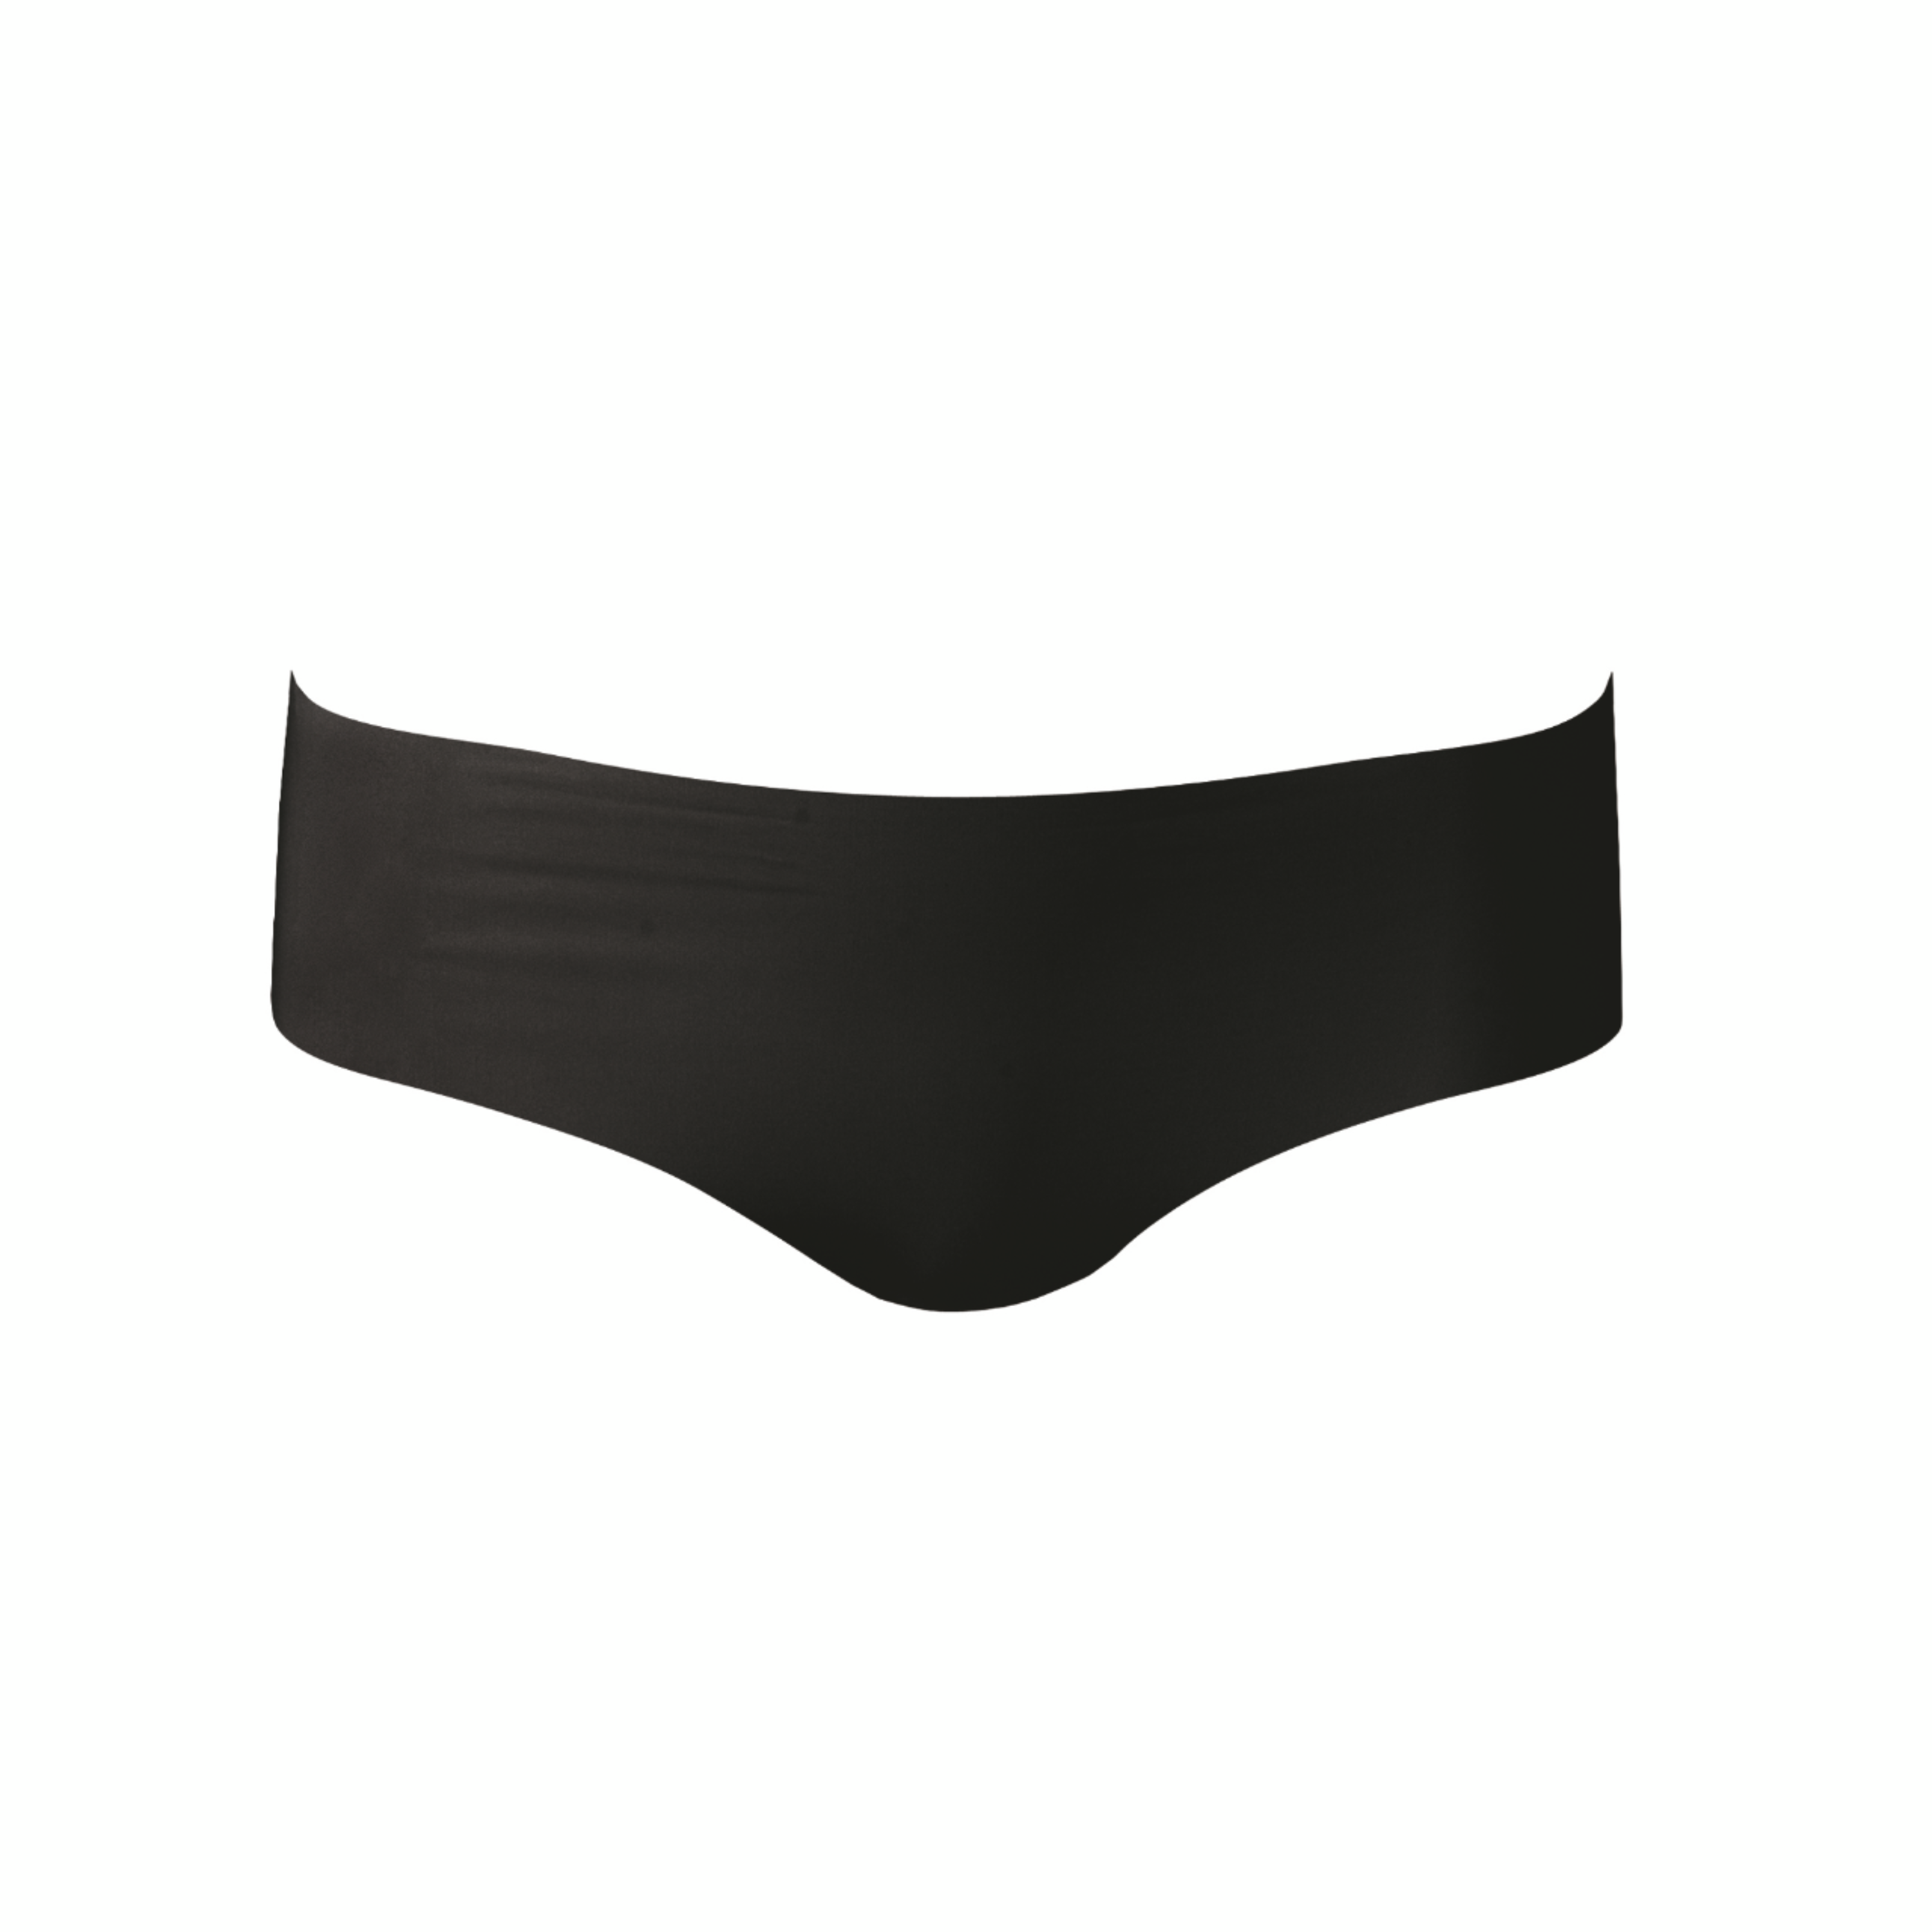 Armoedig Mainstream Gehuurd Calida Dames Naadloze Slip Silhouette Zwart online bestellen